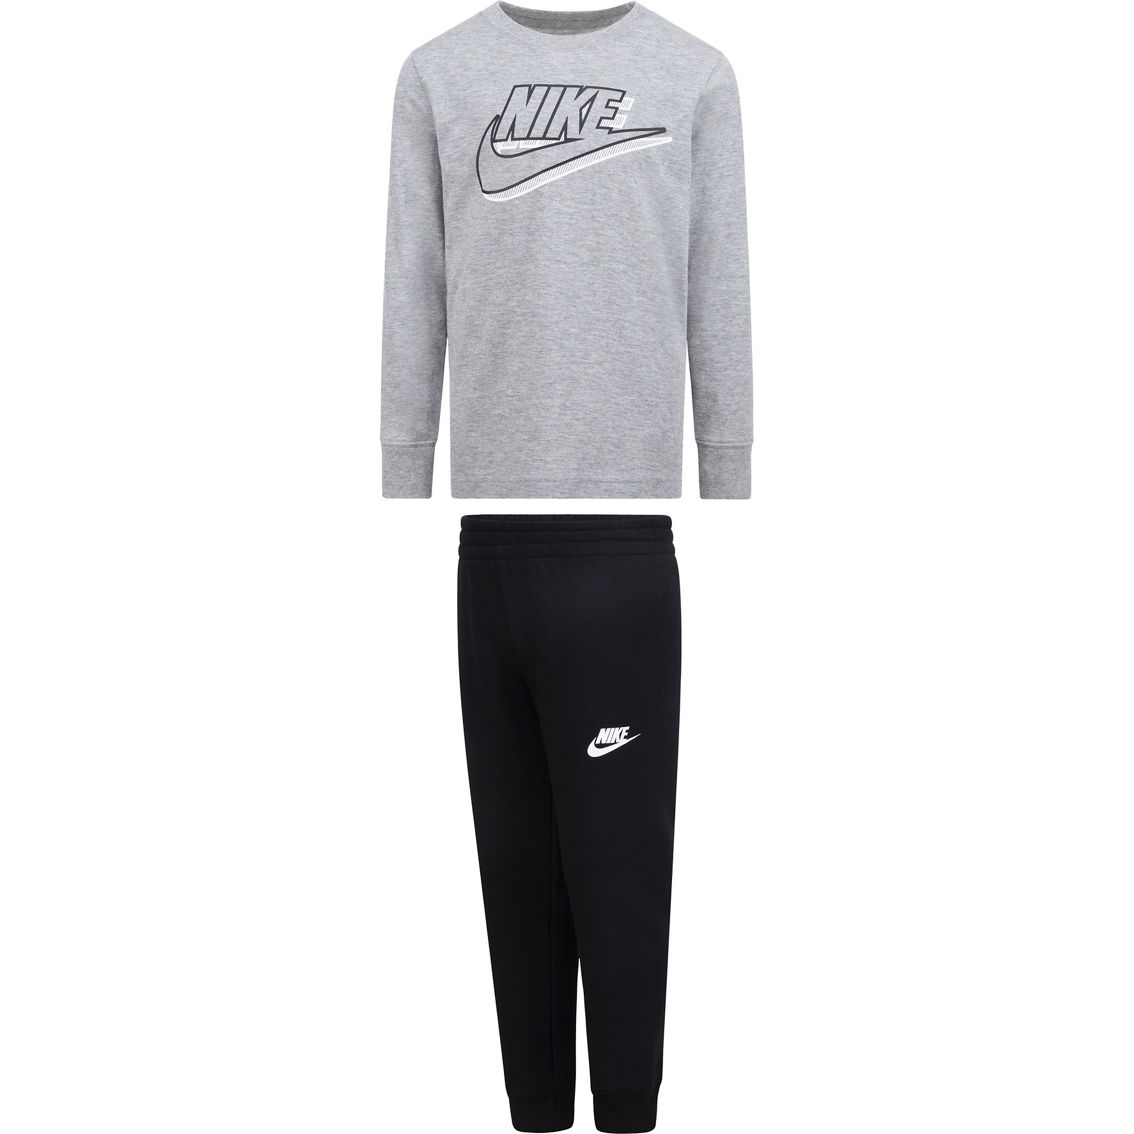 Nike Little Boys Swoosh Tee and Pants 2 pc. Set - Image 1 of 4